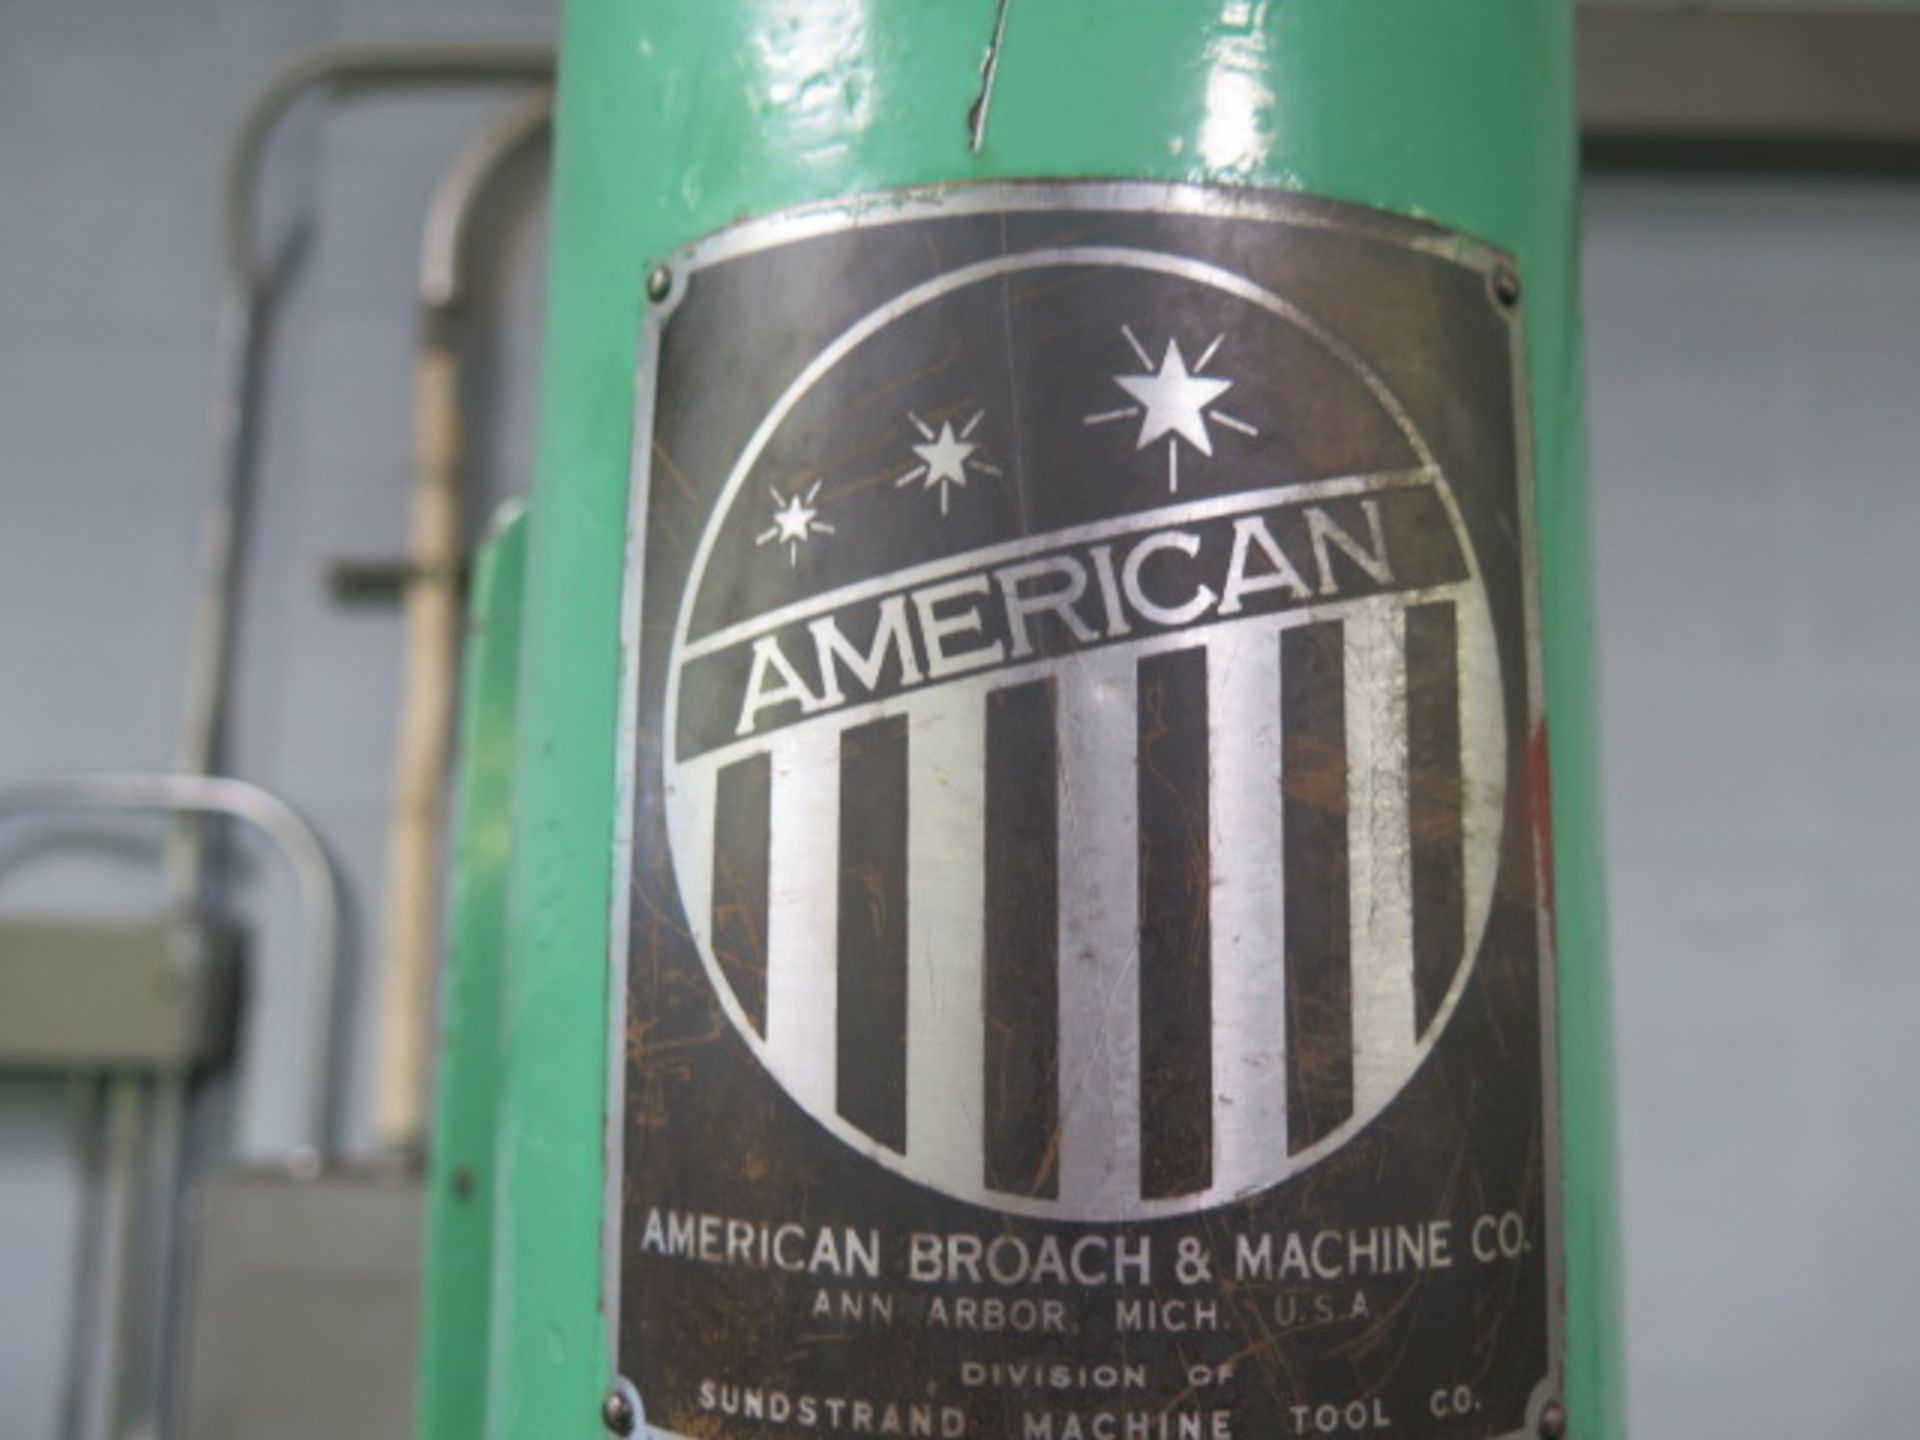 American Broach & Machine Type V-1 ½-4 4 Ton Hydraulic Vertical Broaching Machine s/n 2998 w/ 8” x - Image 7 of 7